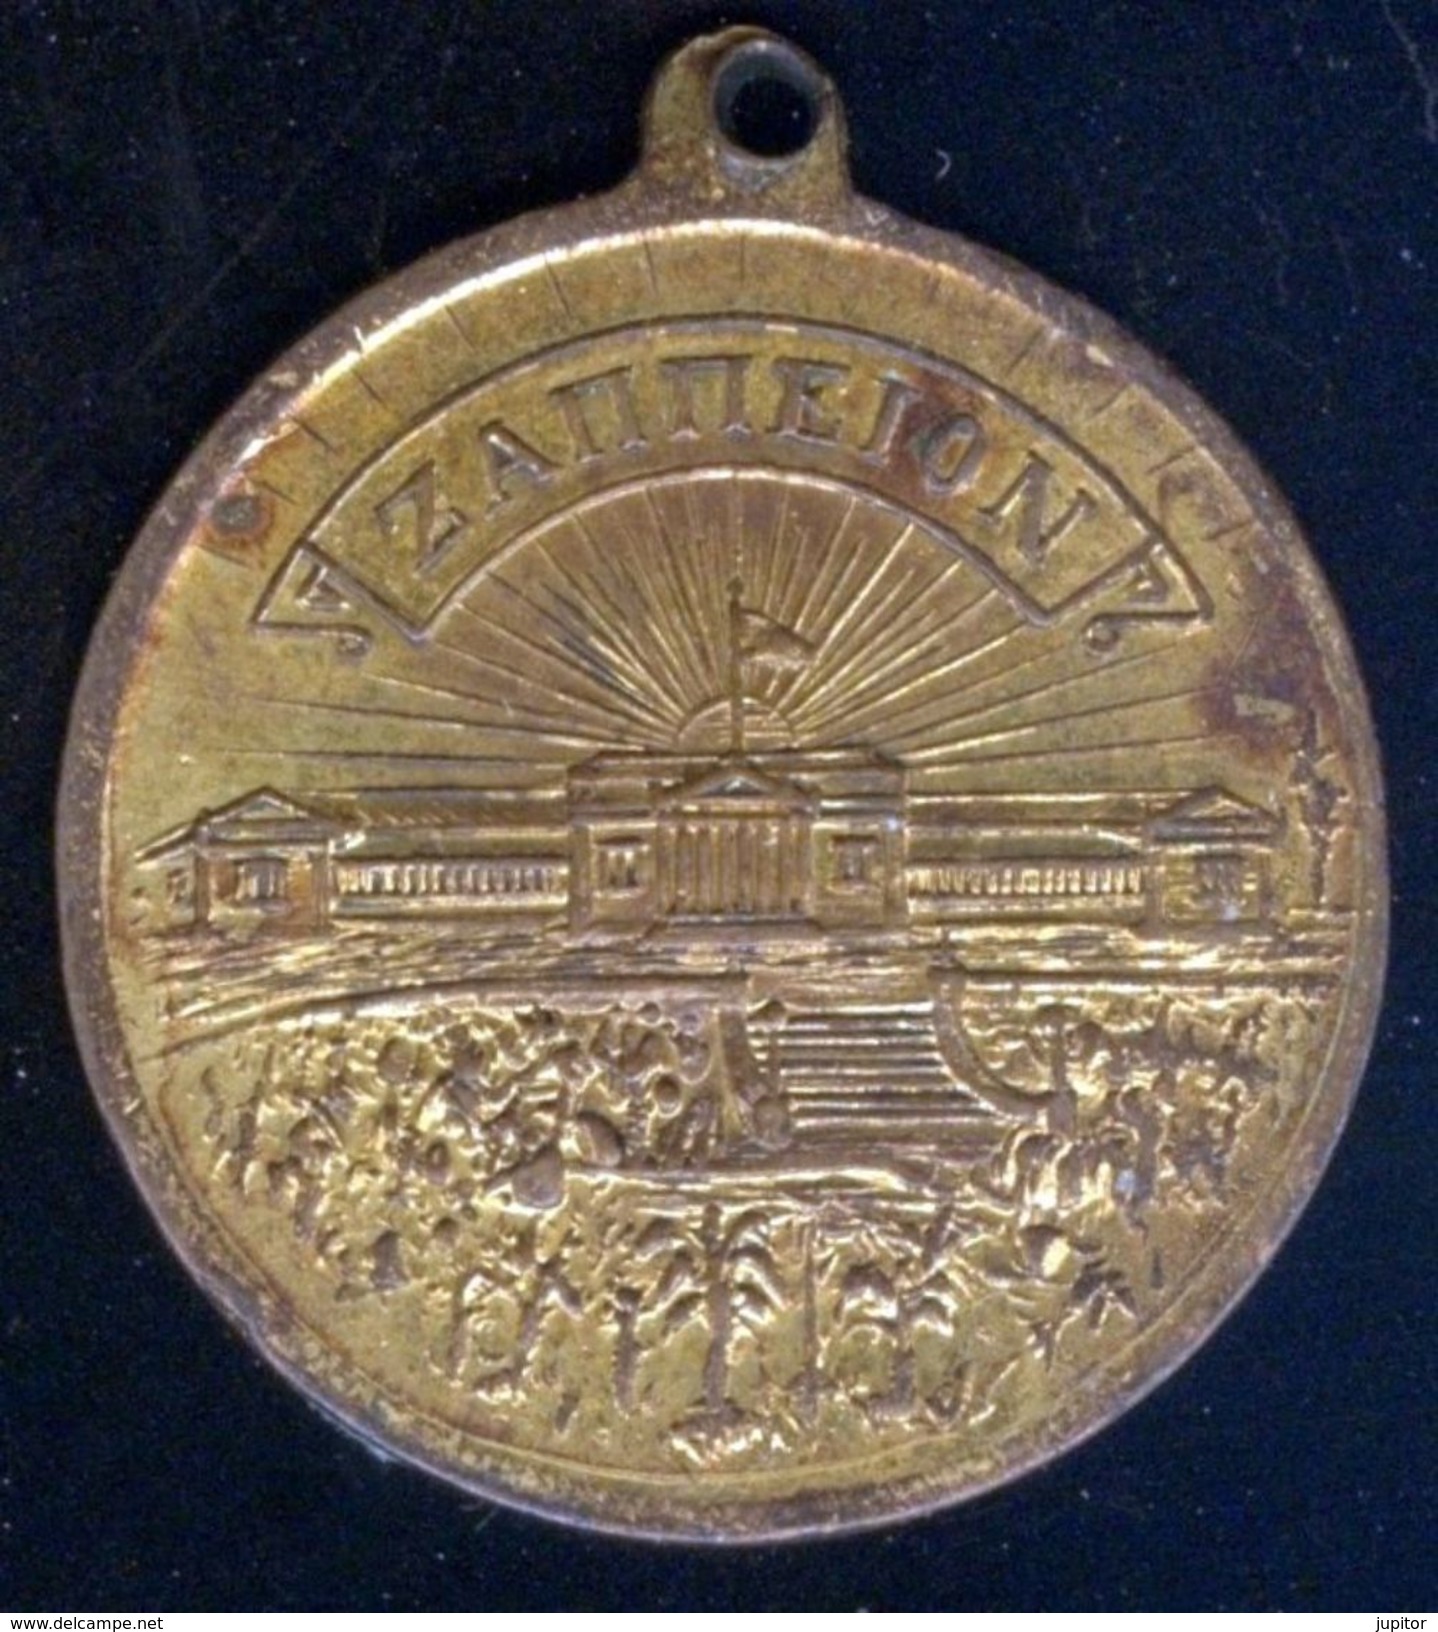 1903 Greece Athens Zappeio International Exhibition Hall Medal - Adel